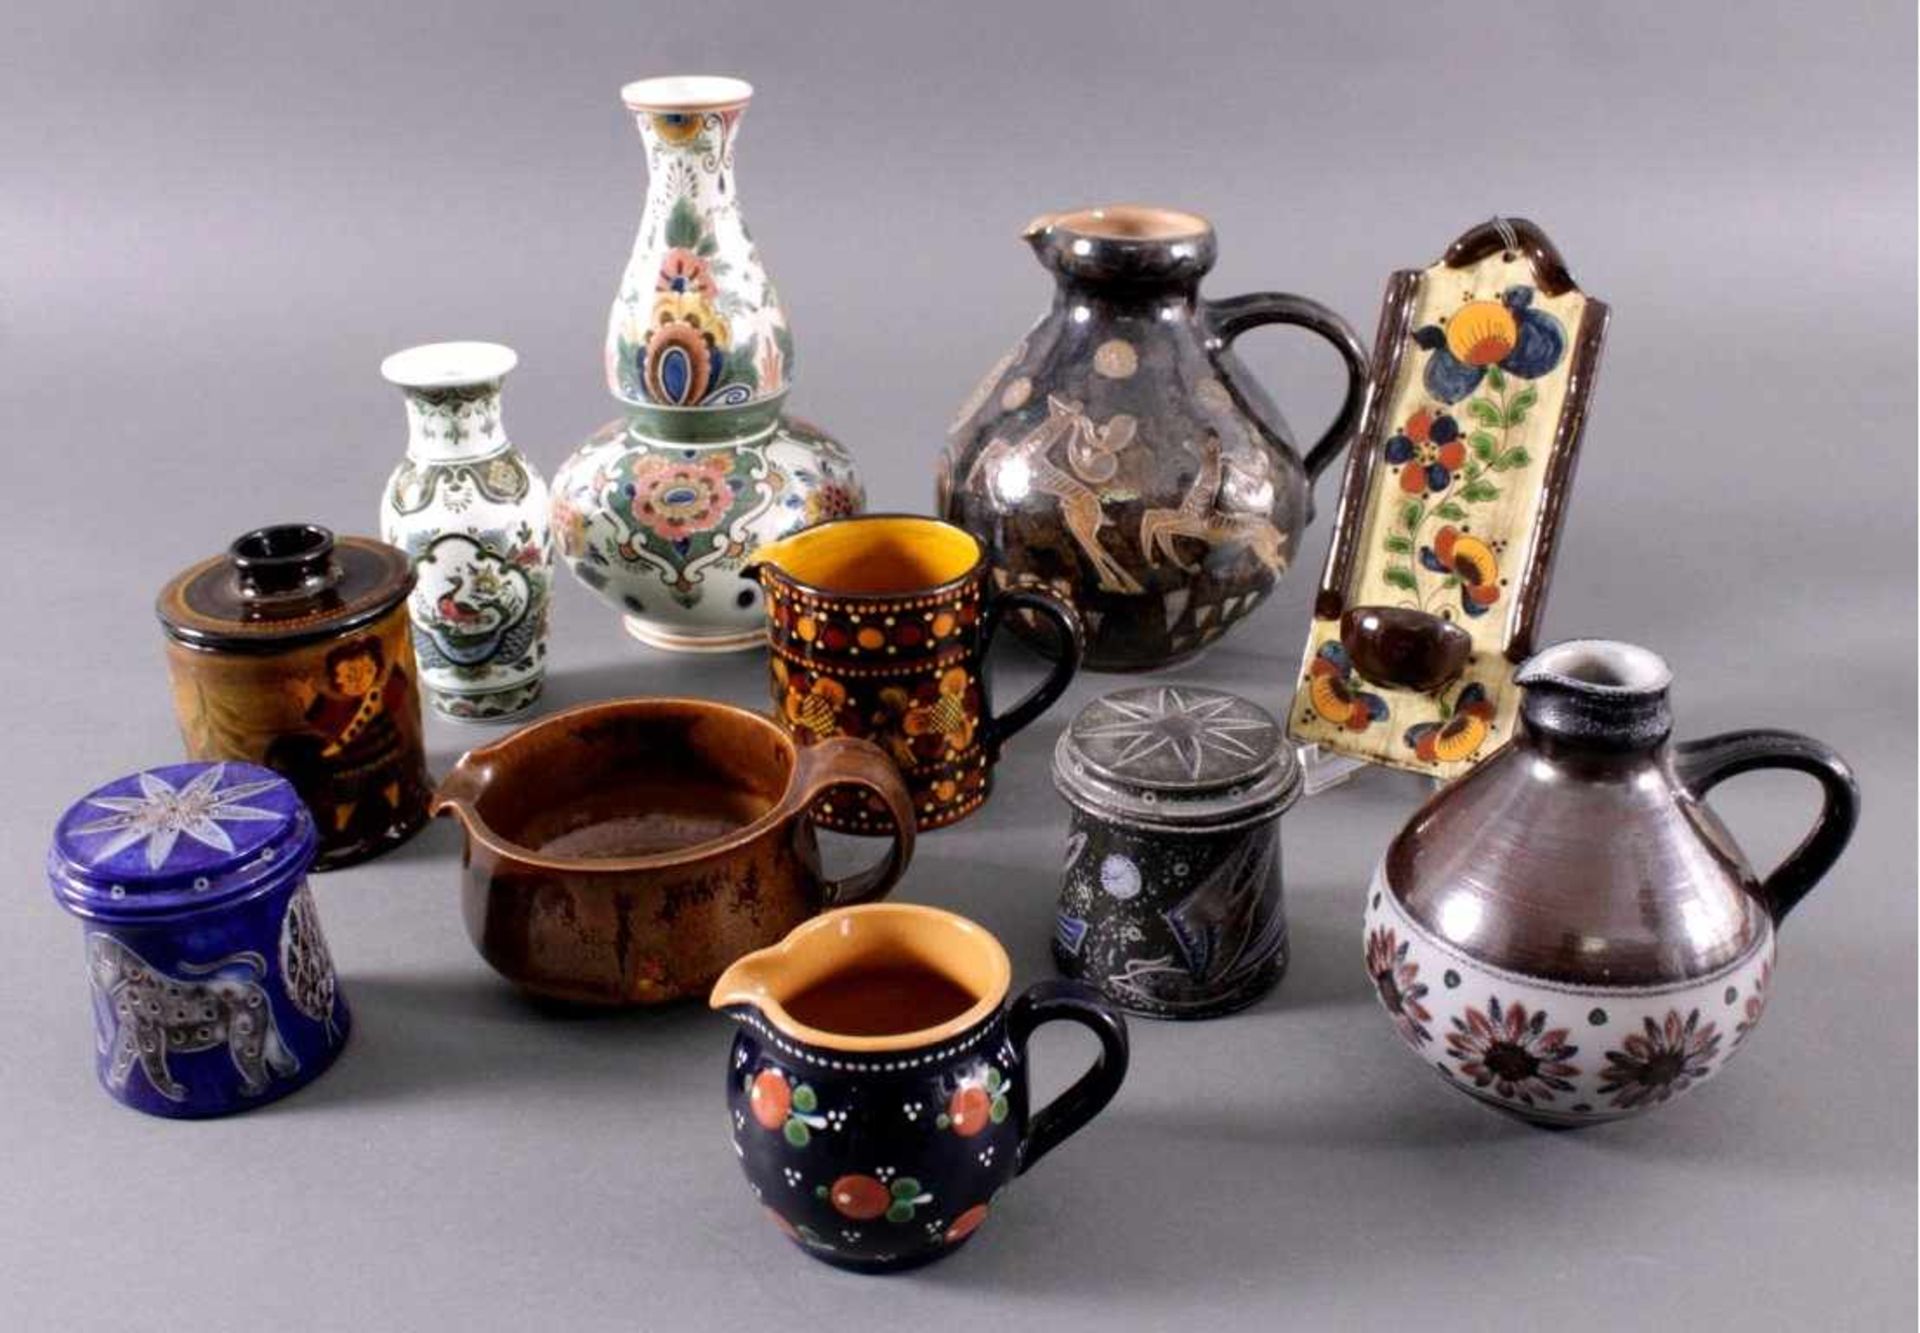 Keramik Konvolut11 Teile, Vasen, Henkelkannen, Deckeldose...Unterschiedliche Manufakturen, Formen,